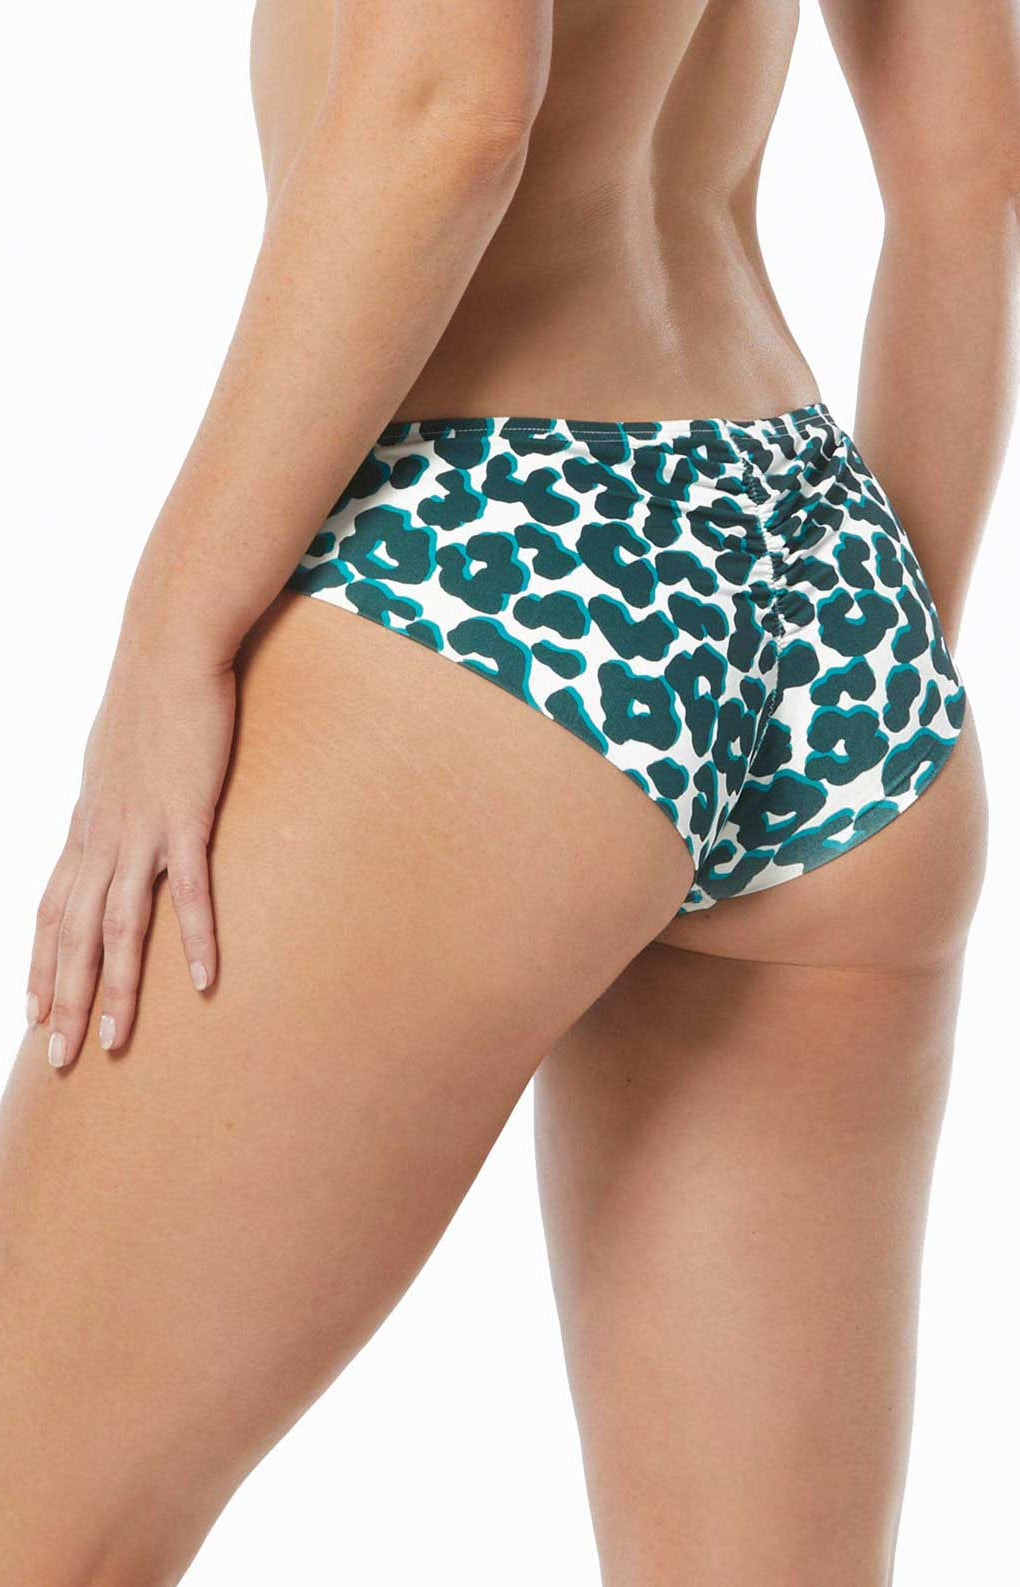 Vince Camuto: Seaside Leopard Cheeky Bikini Bottom